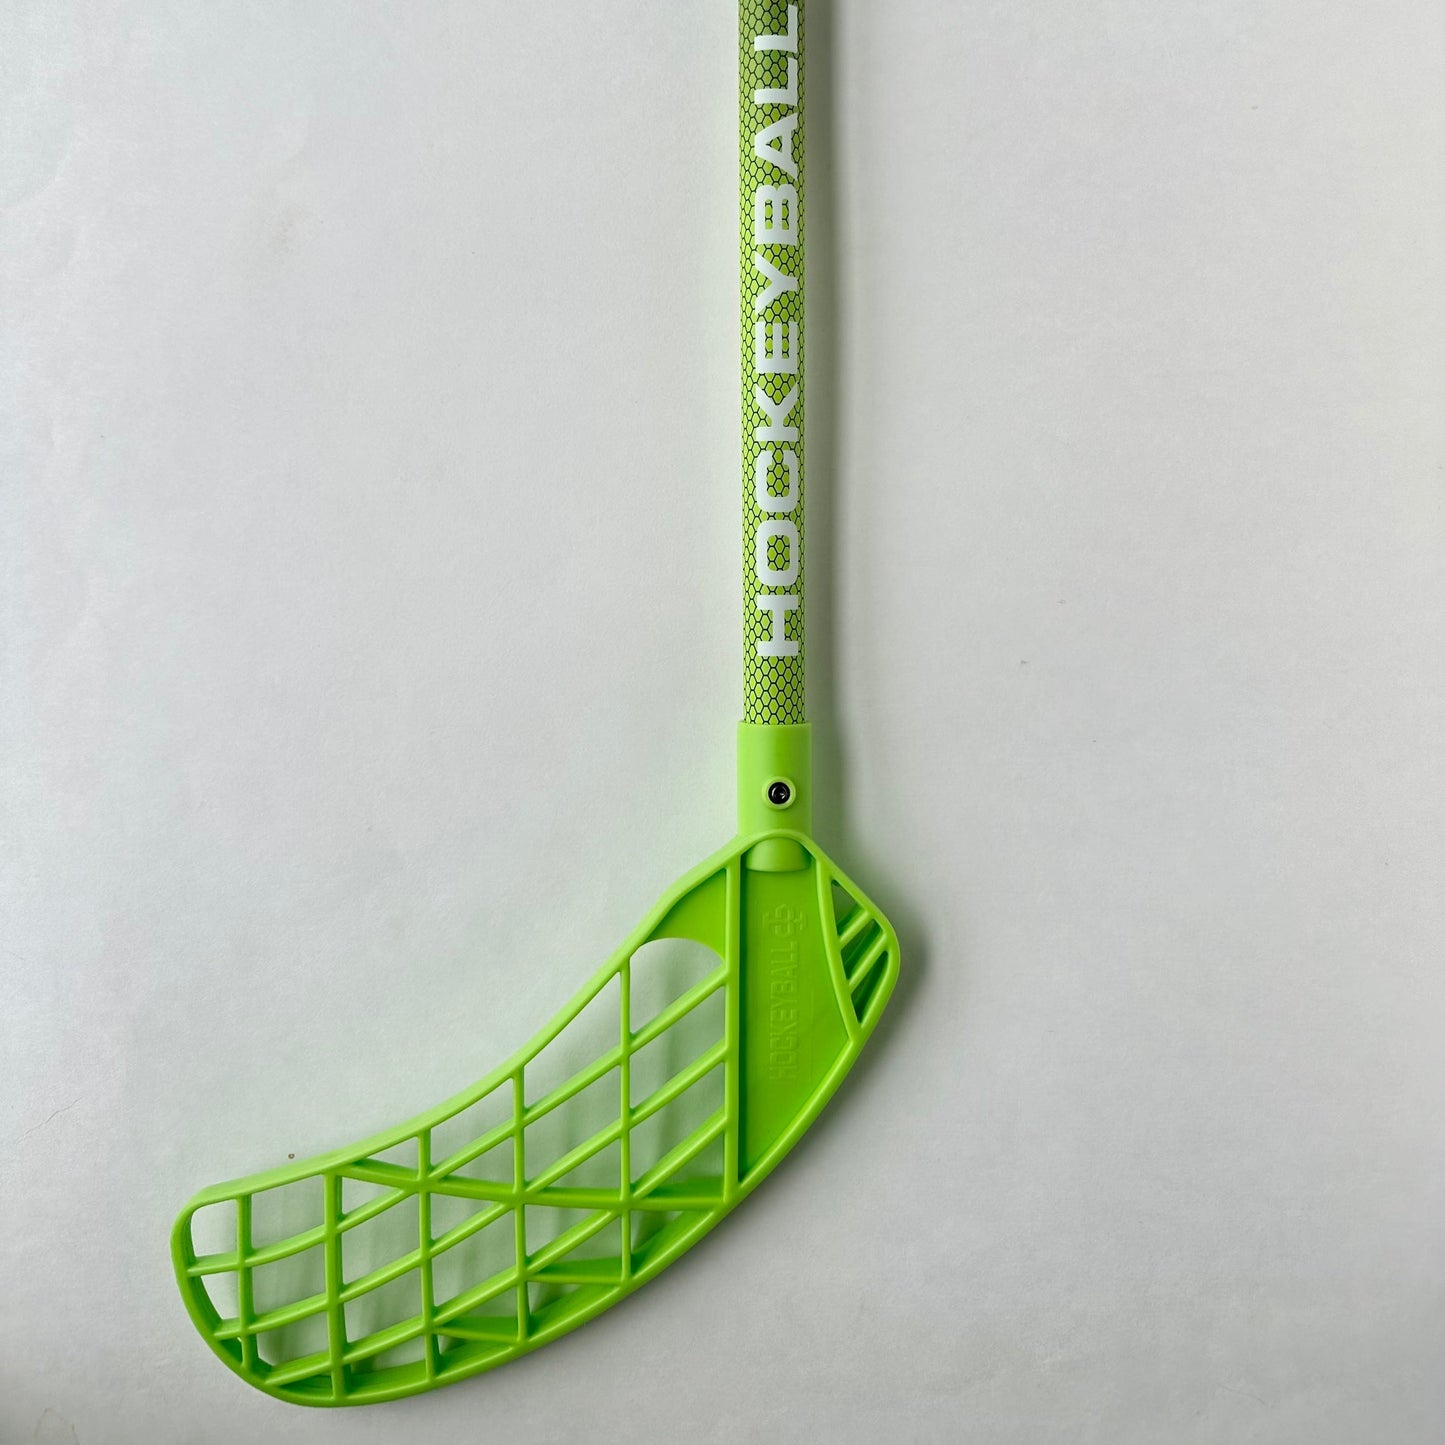 Hockeyball green stick topdown view